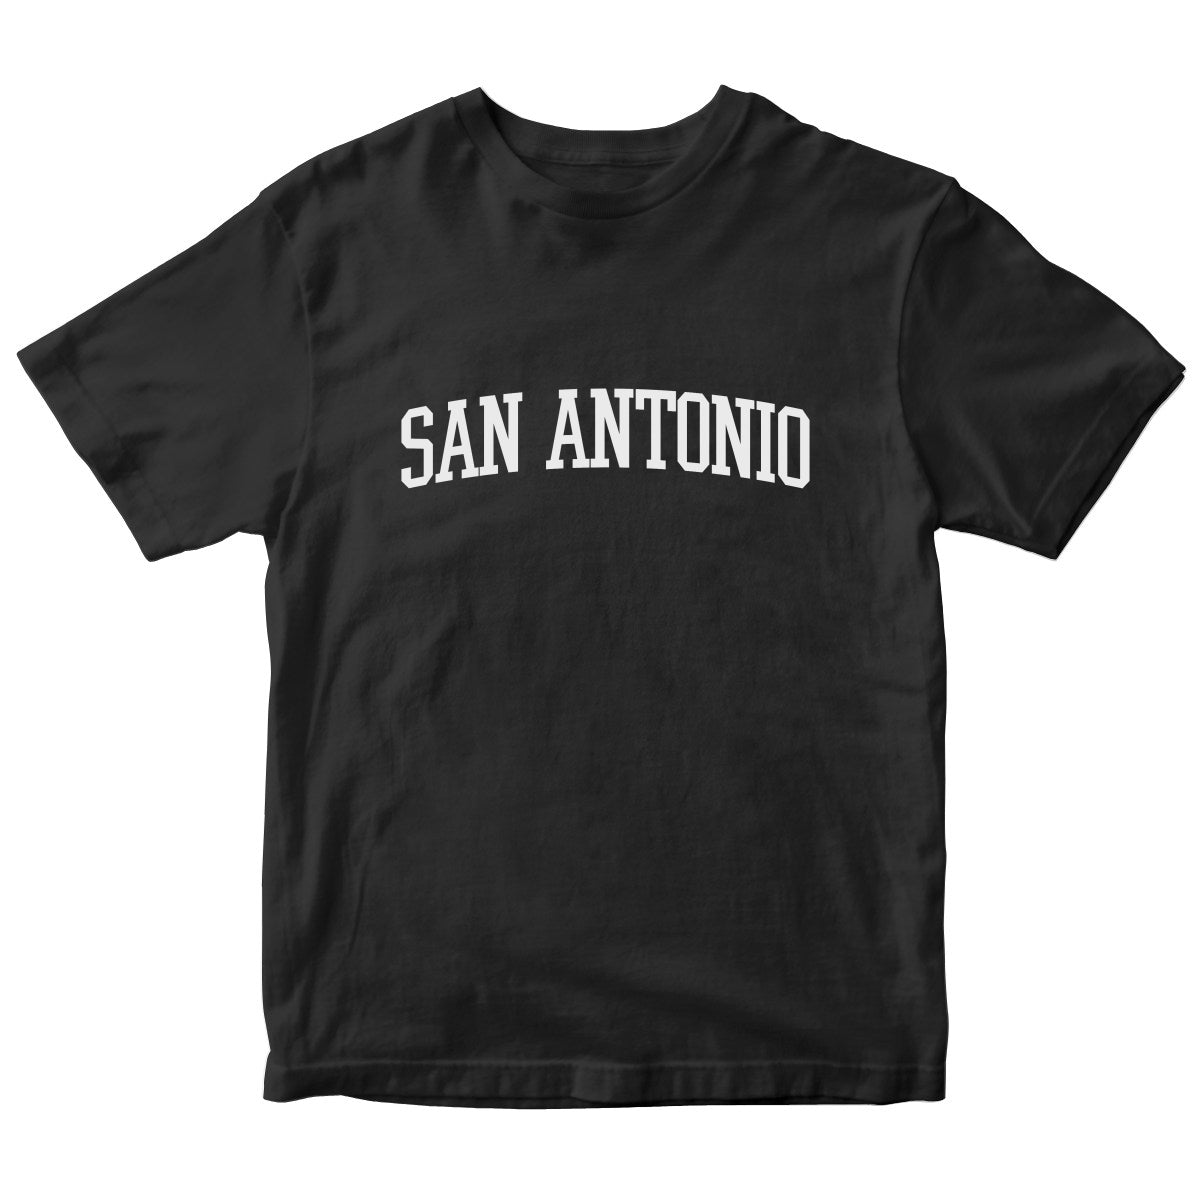 San Antonio Kids T-shirt